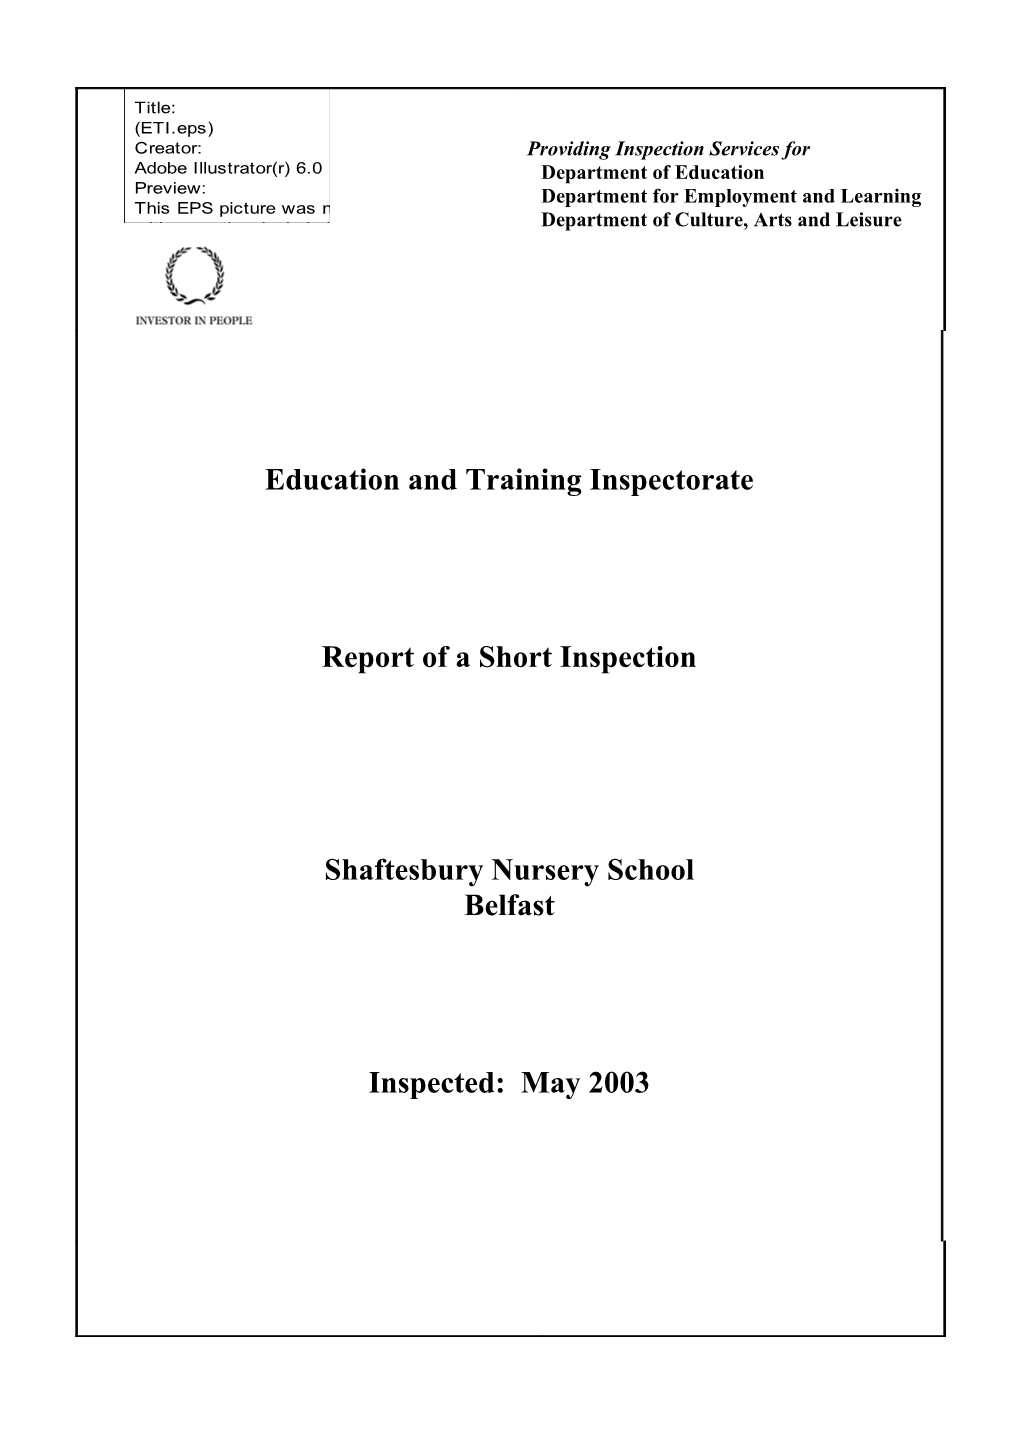 Report on the Inspection of Shaftsbury Nursery School, Percy Street, Belfast